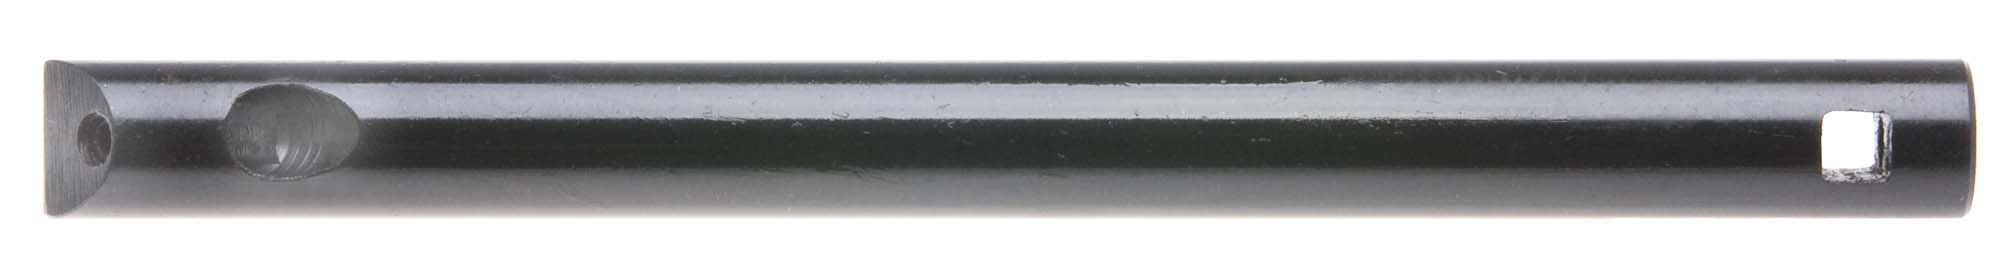 5/16" Double End Boring Bar- High Speed Steel Toolbit Type